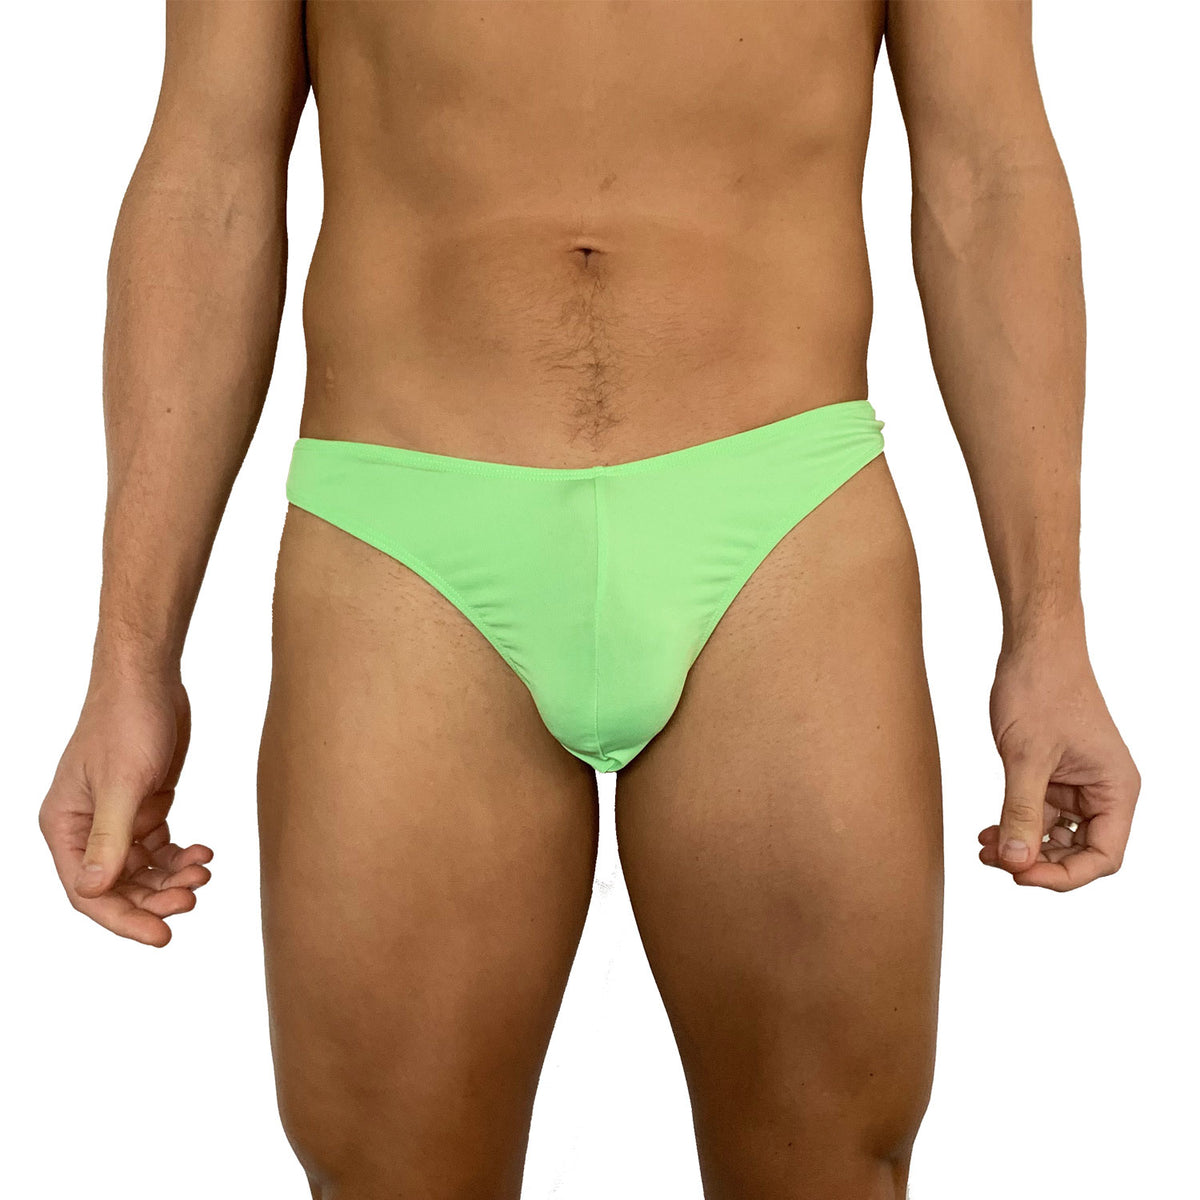 Men's Pouch Front, G-String thong shown in Neon Green Milliskin Tricot  Spandex